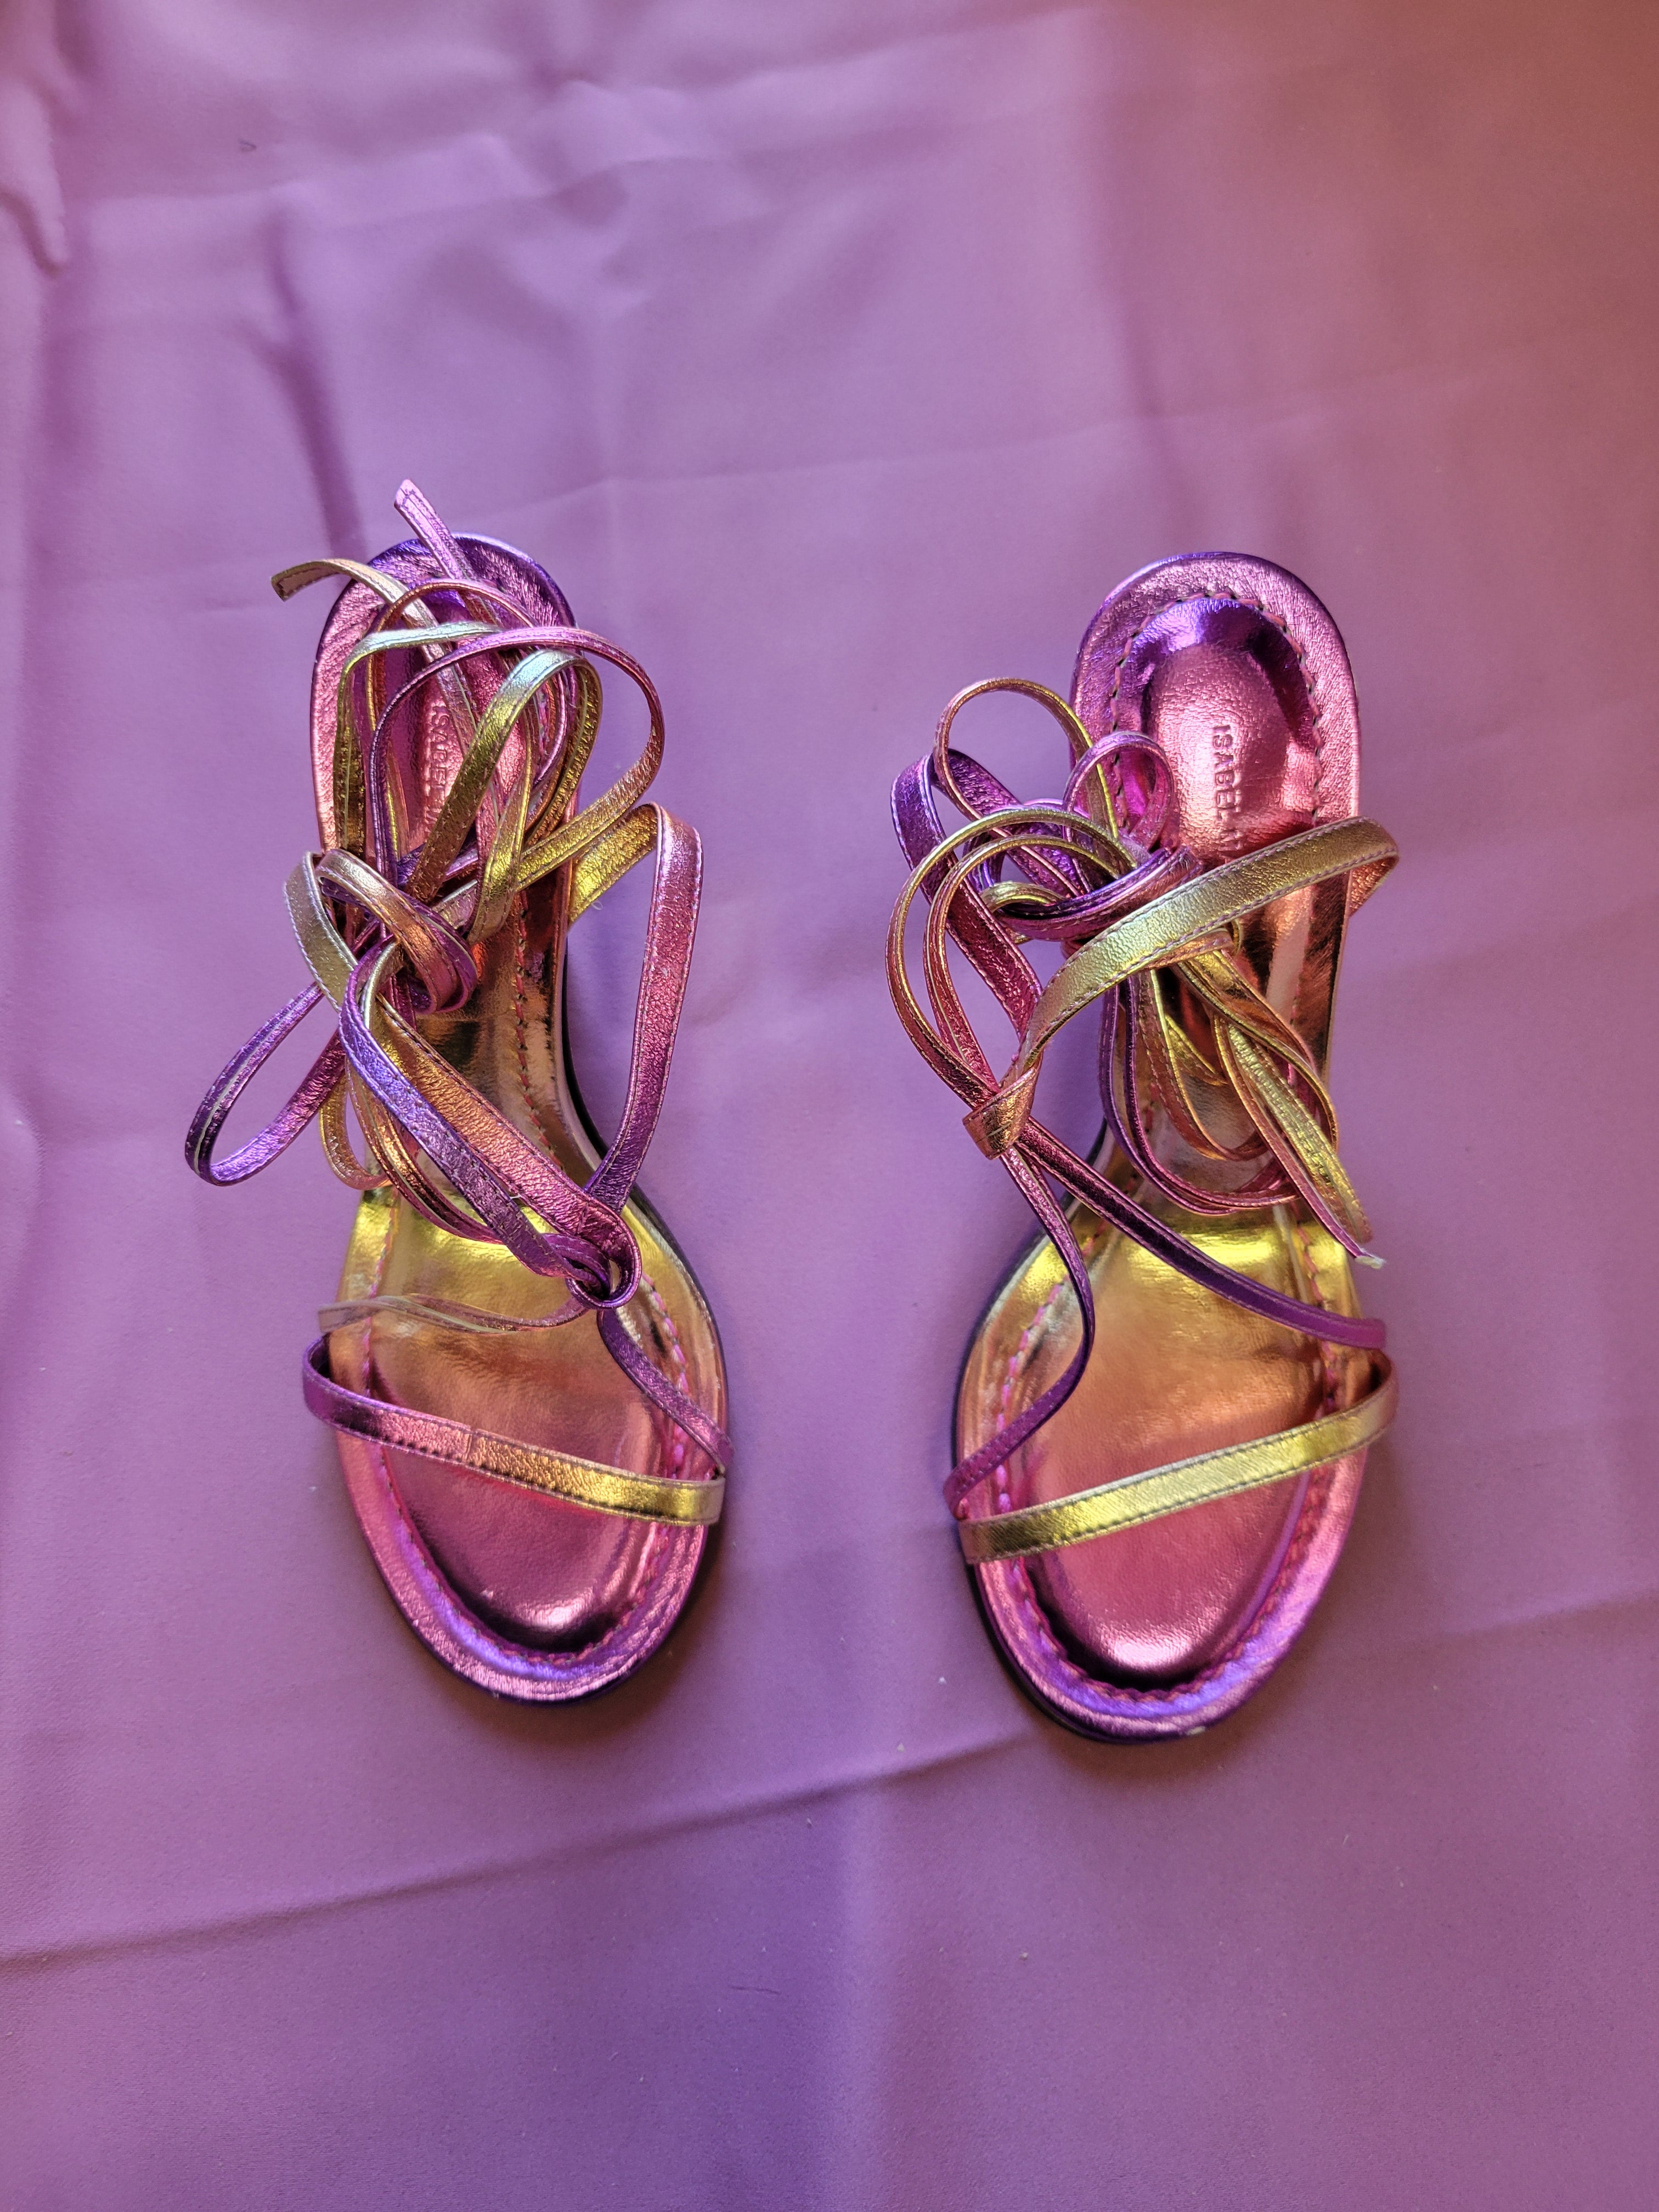 Isabel Marant Aliza Sandal in Metallic Pink Women Size 36